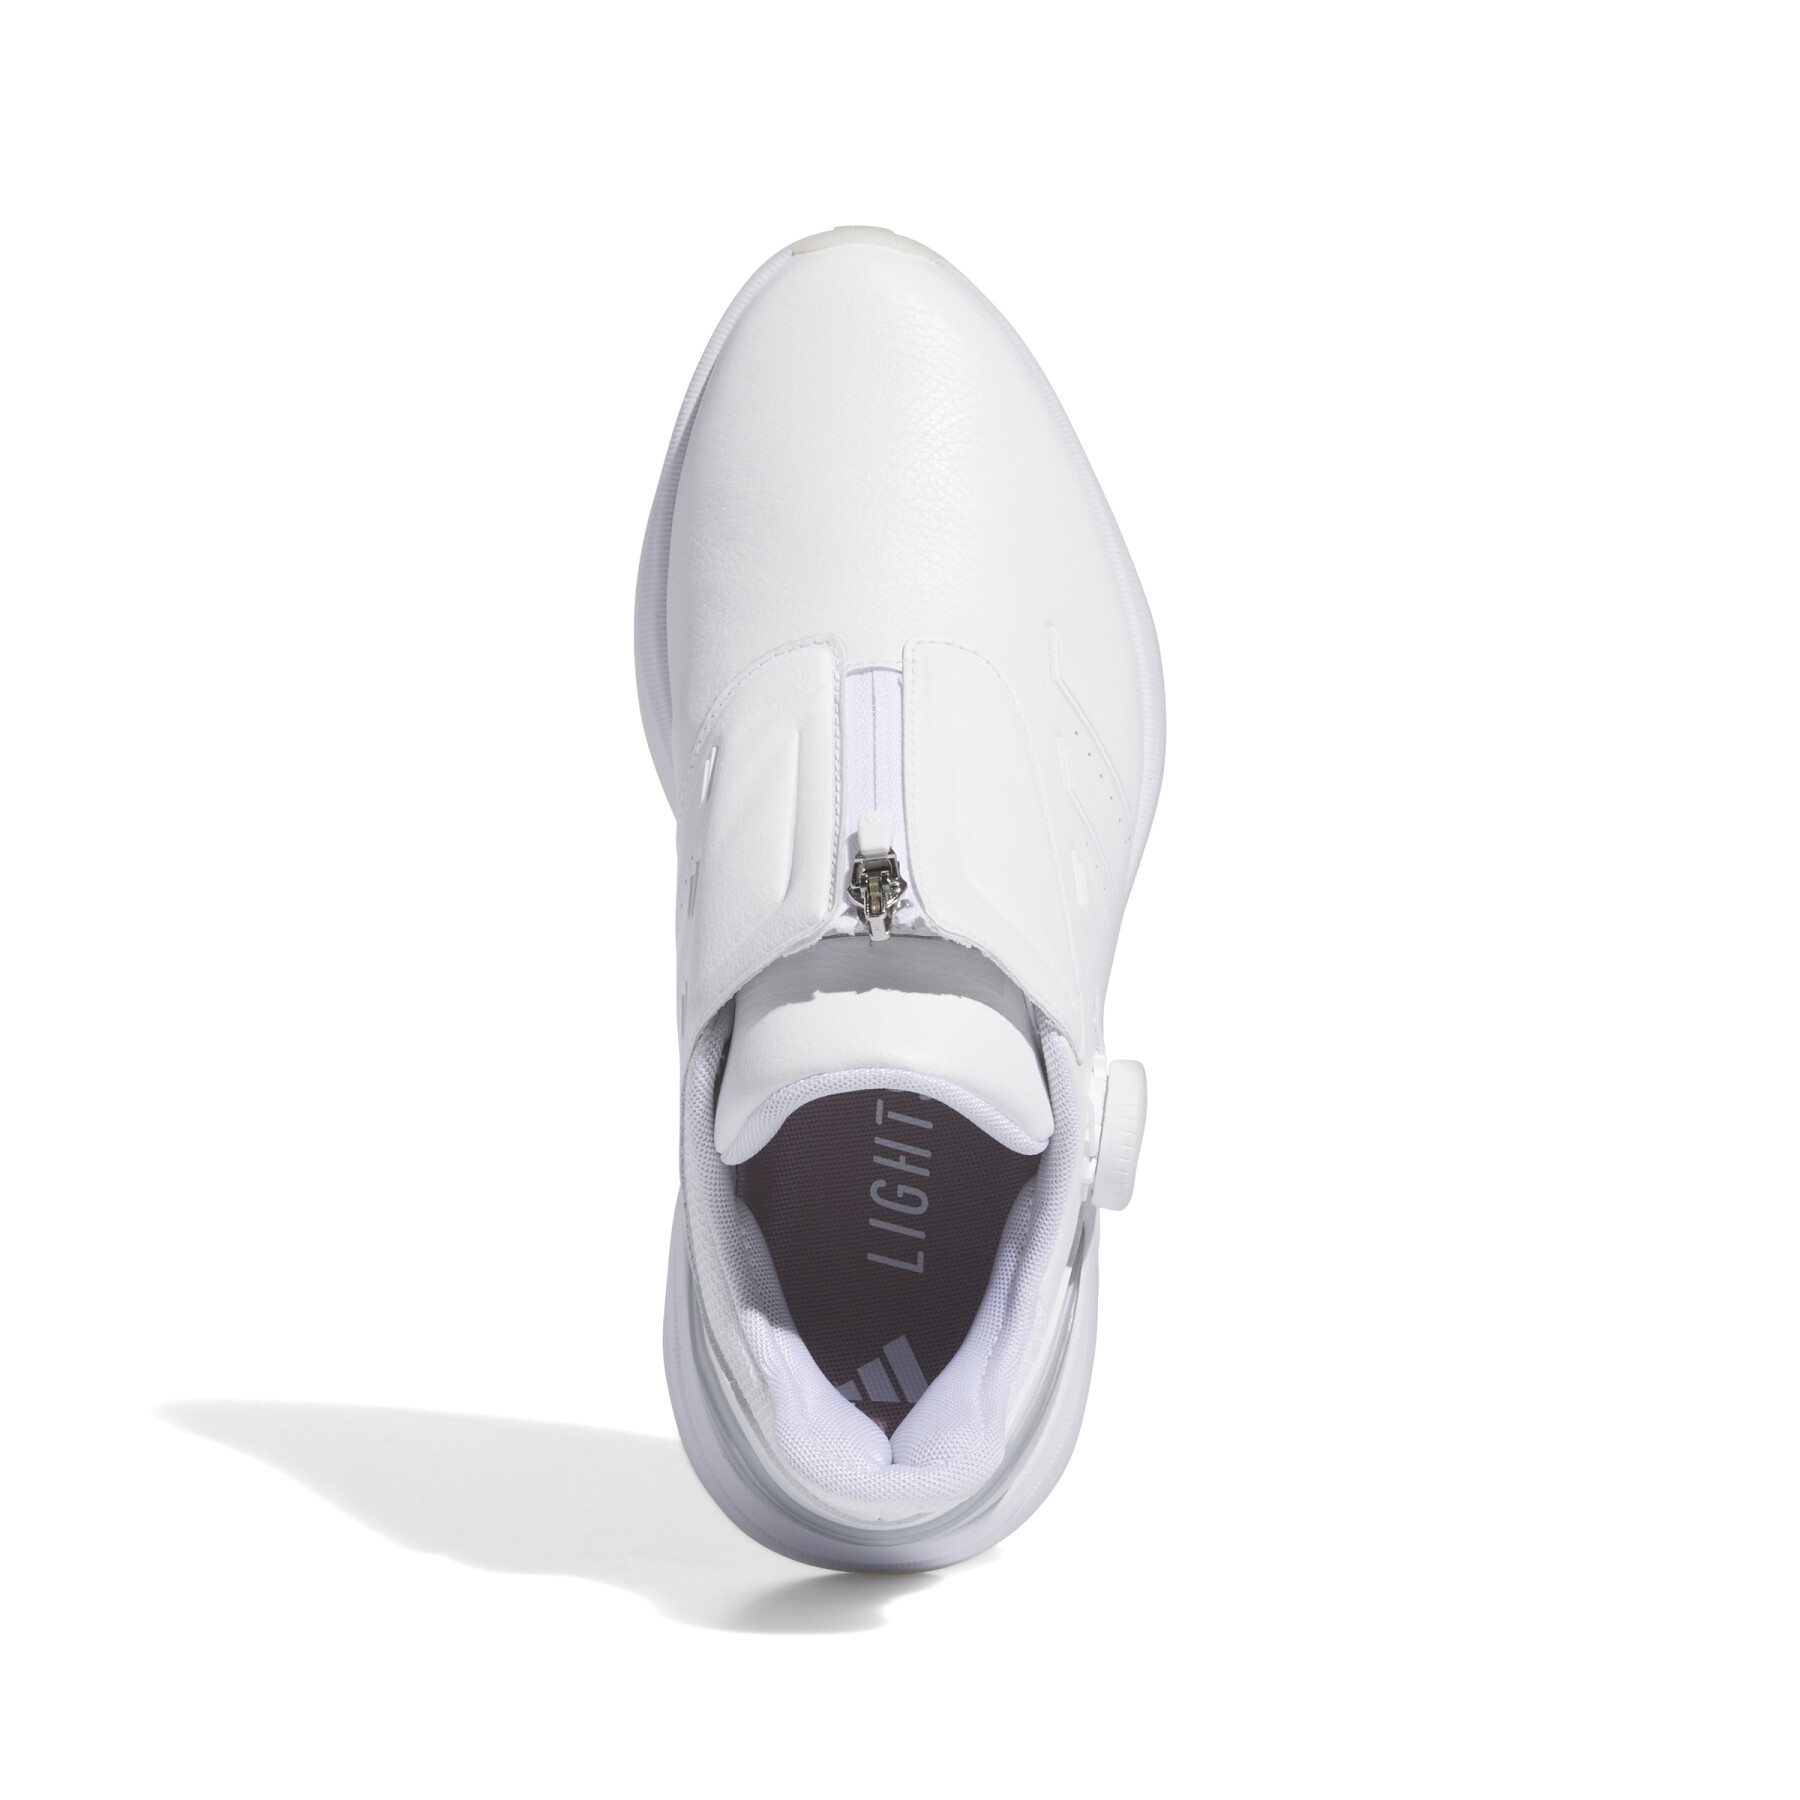 Women's spikeless golf shoes adidas Solarmotion BOA 24 Spikeless